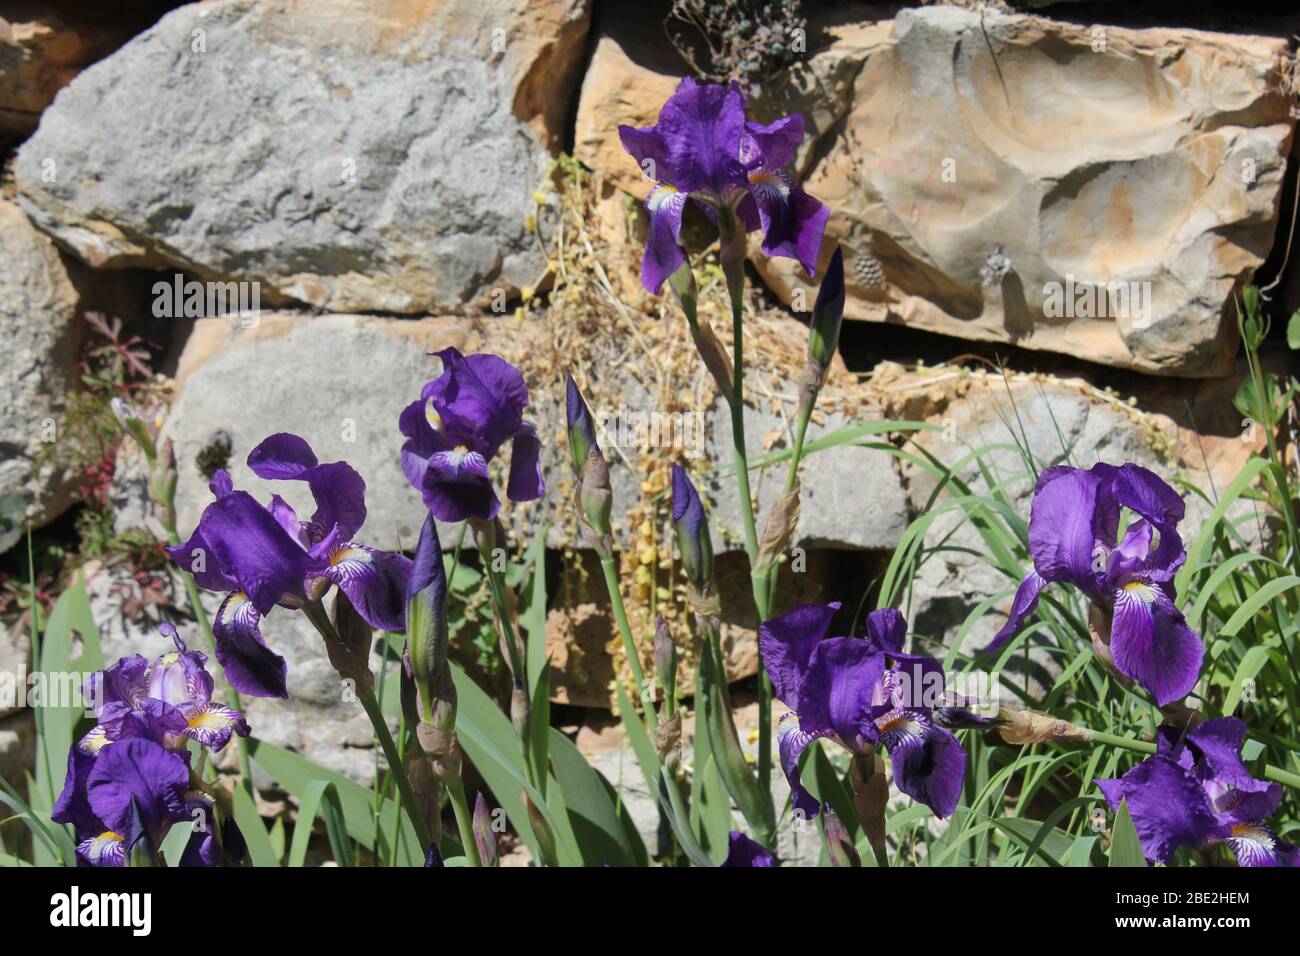 Group of purple irises Stock Photo